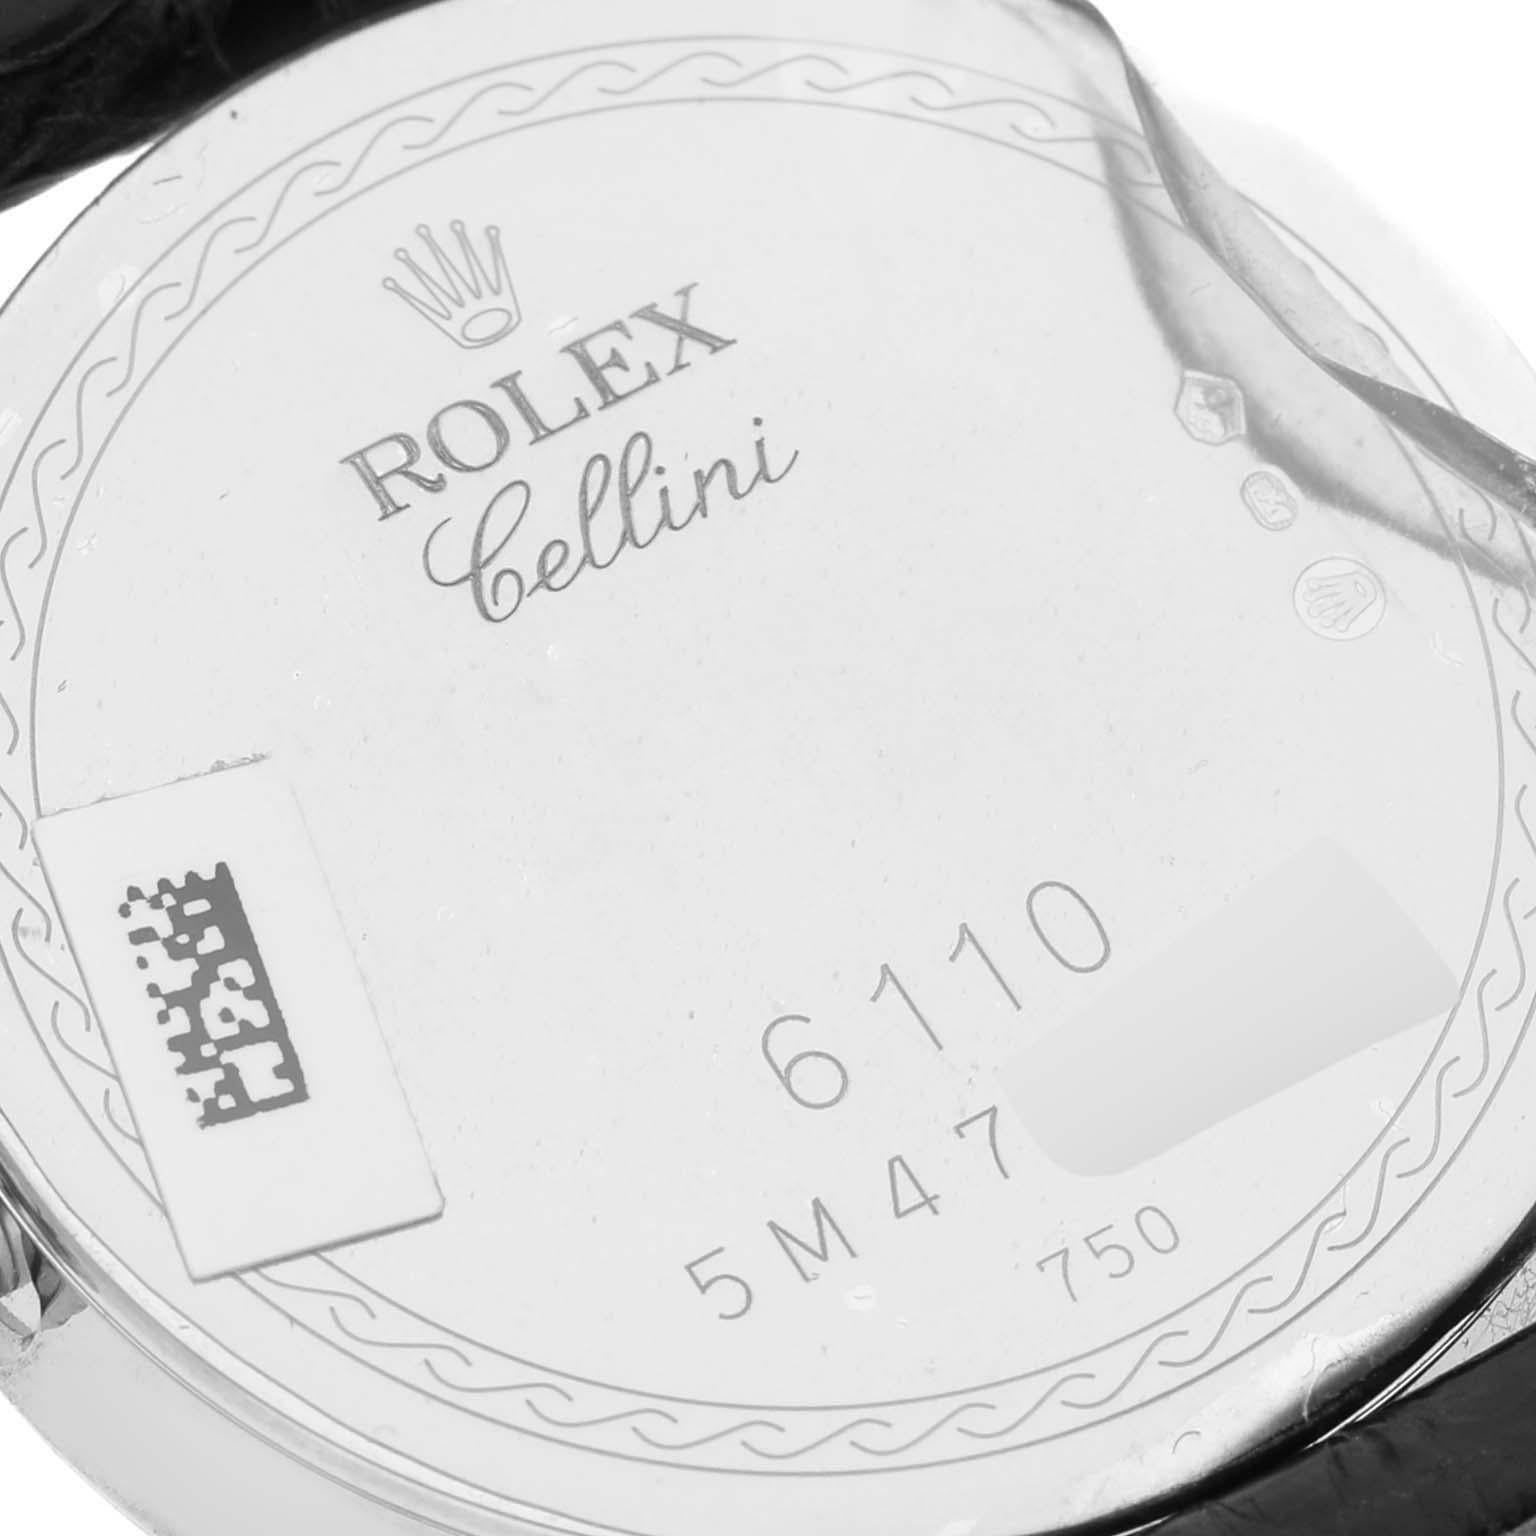 Rolex Cellini Classic White Gold Anniversary Dial Ladies Watch 6110 Unworn 1